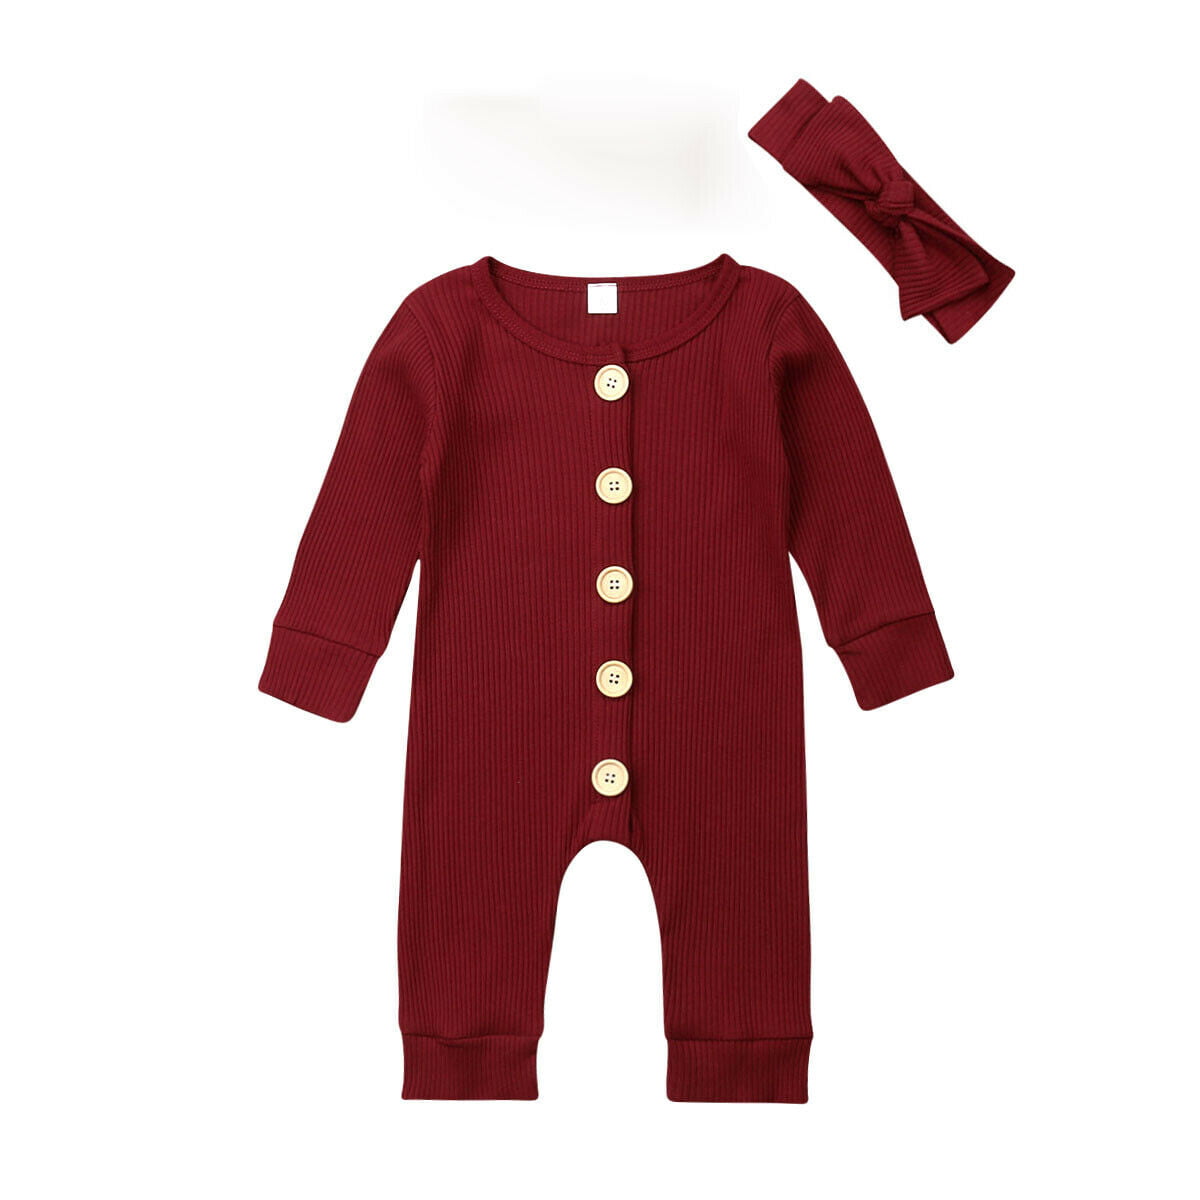 Newborn Baby Girls Boy Clothes Set Short Sleeve Romper Suit Jump R9S1 